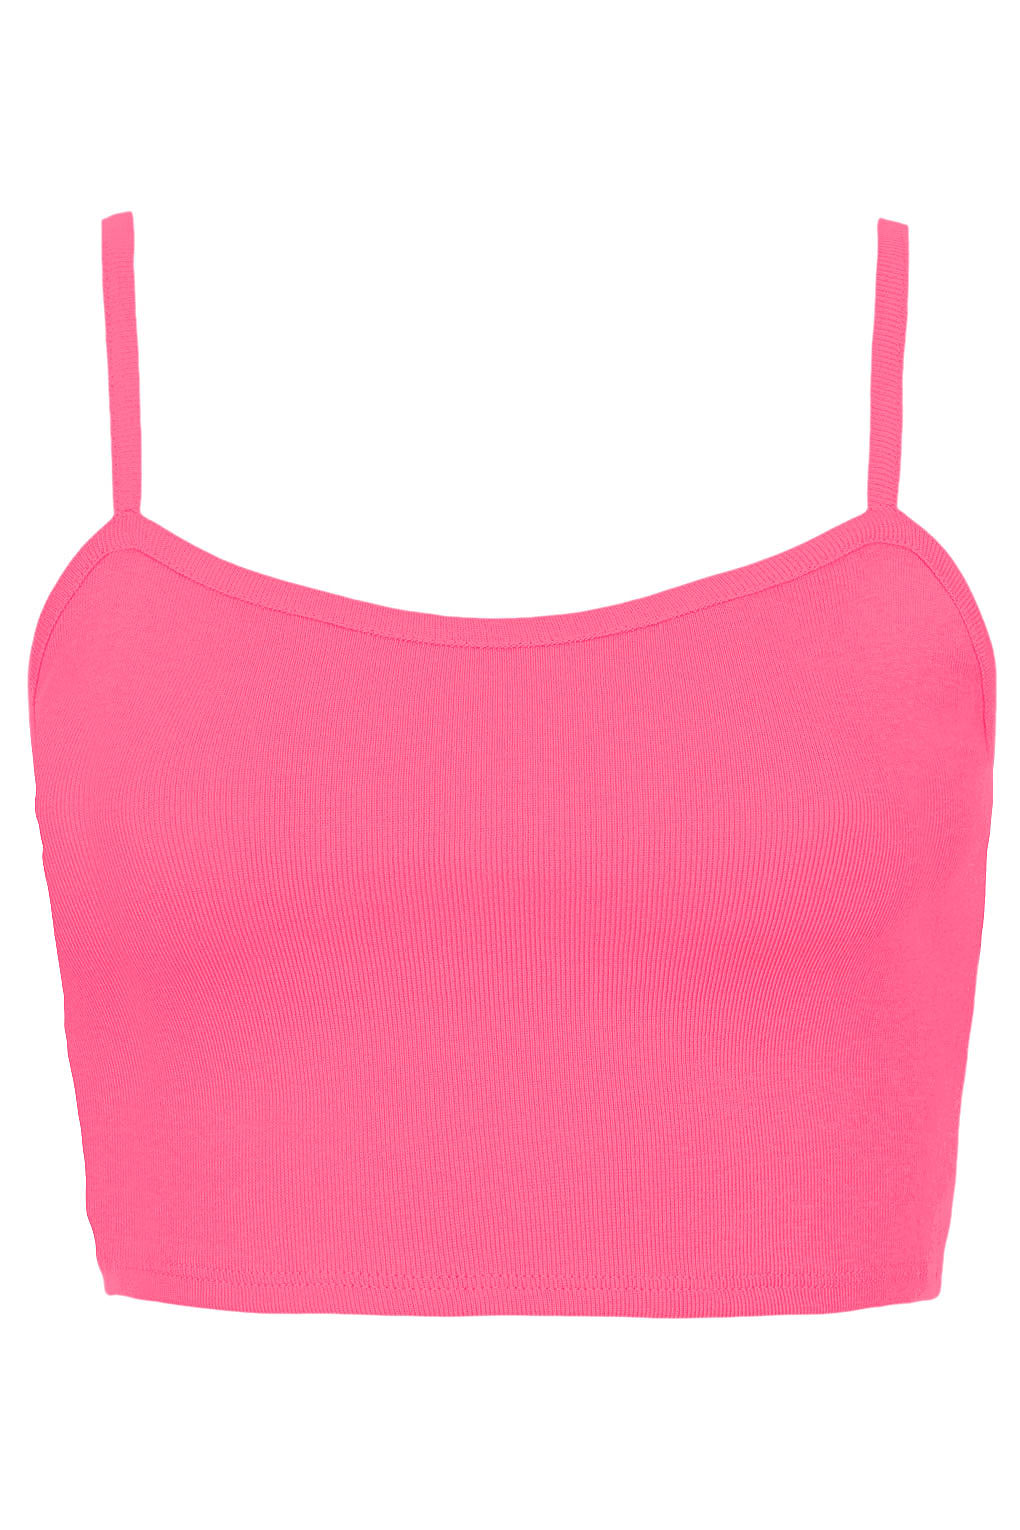 Topshop Bralet Crop Top in Pink (bubblegum pink) | Lyst